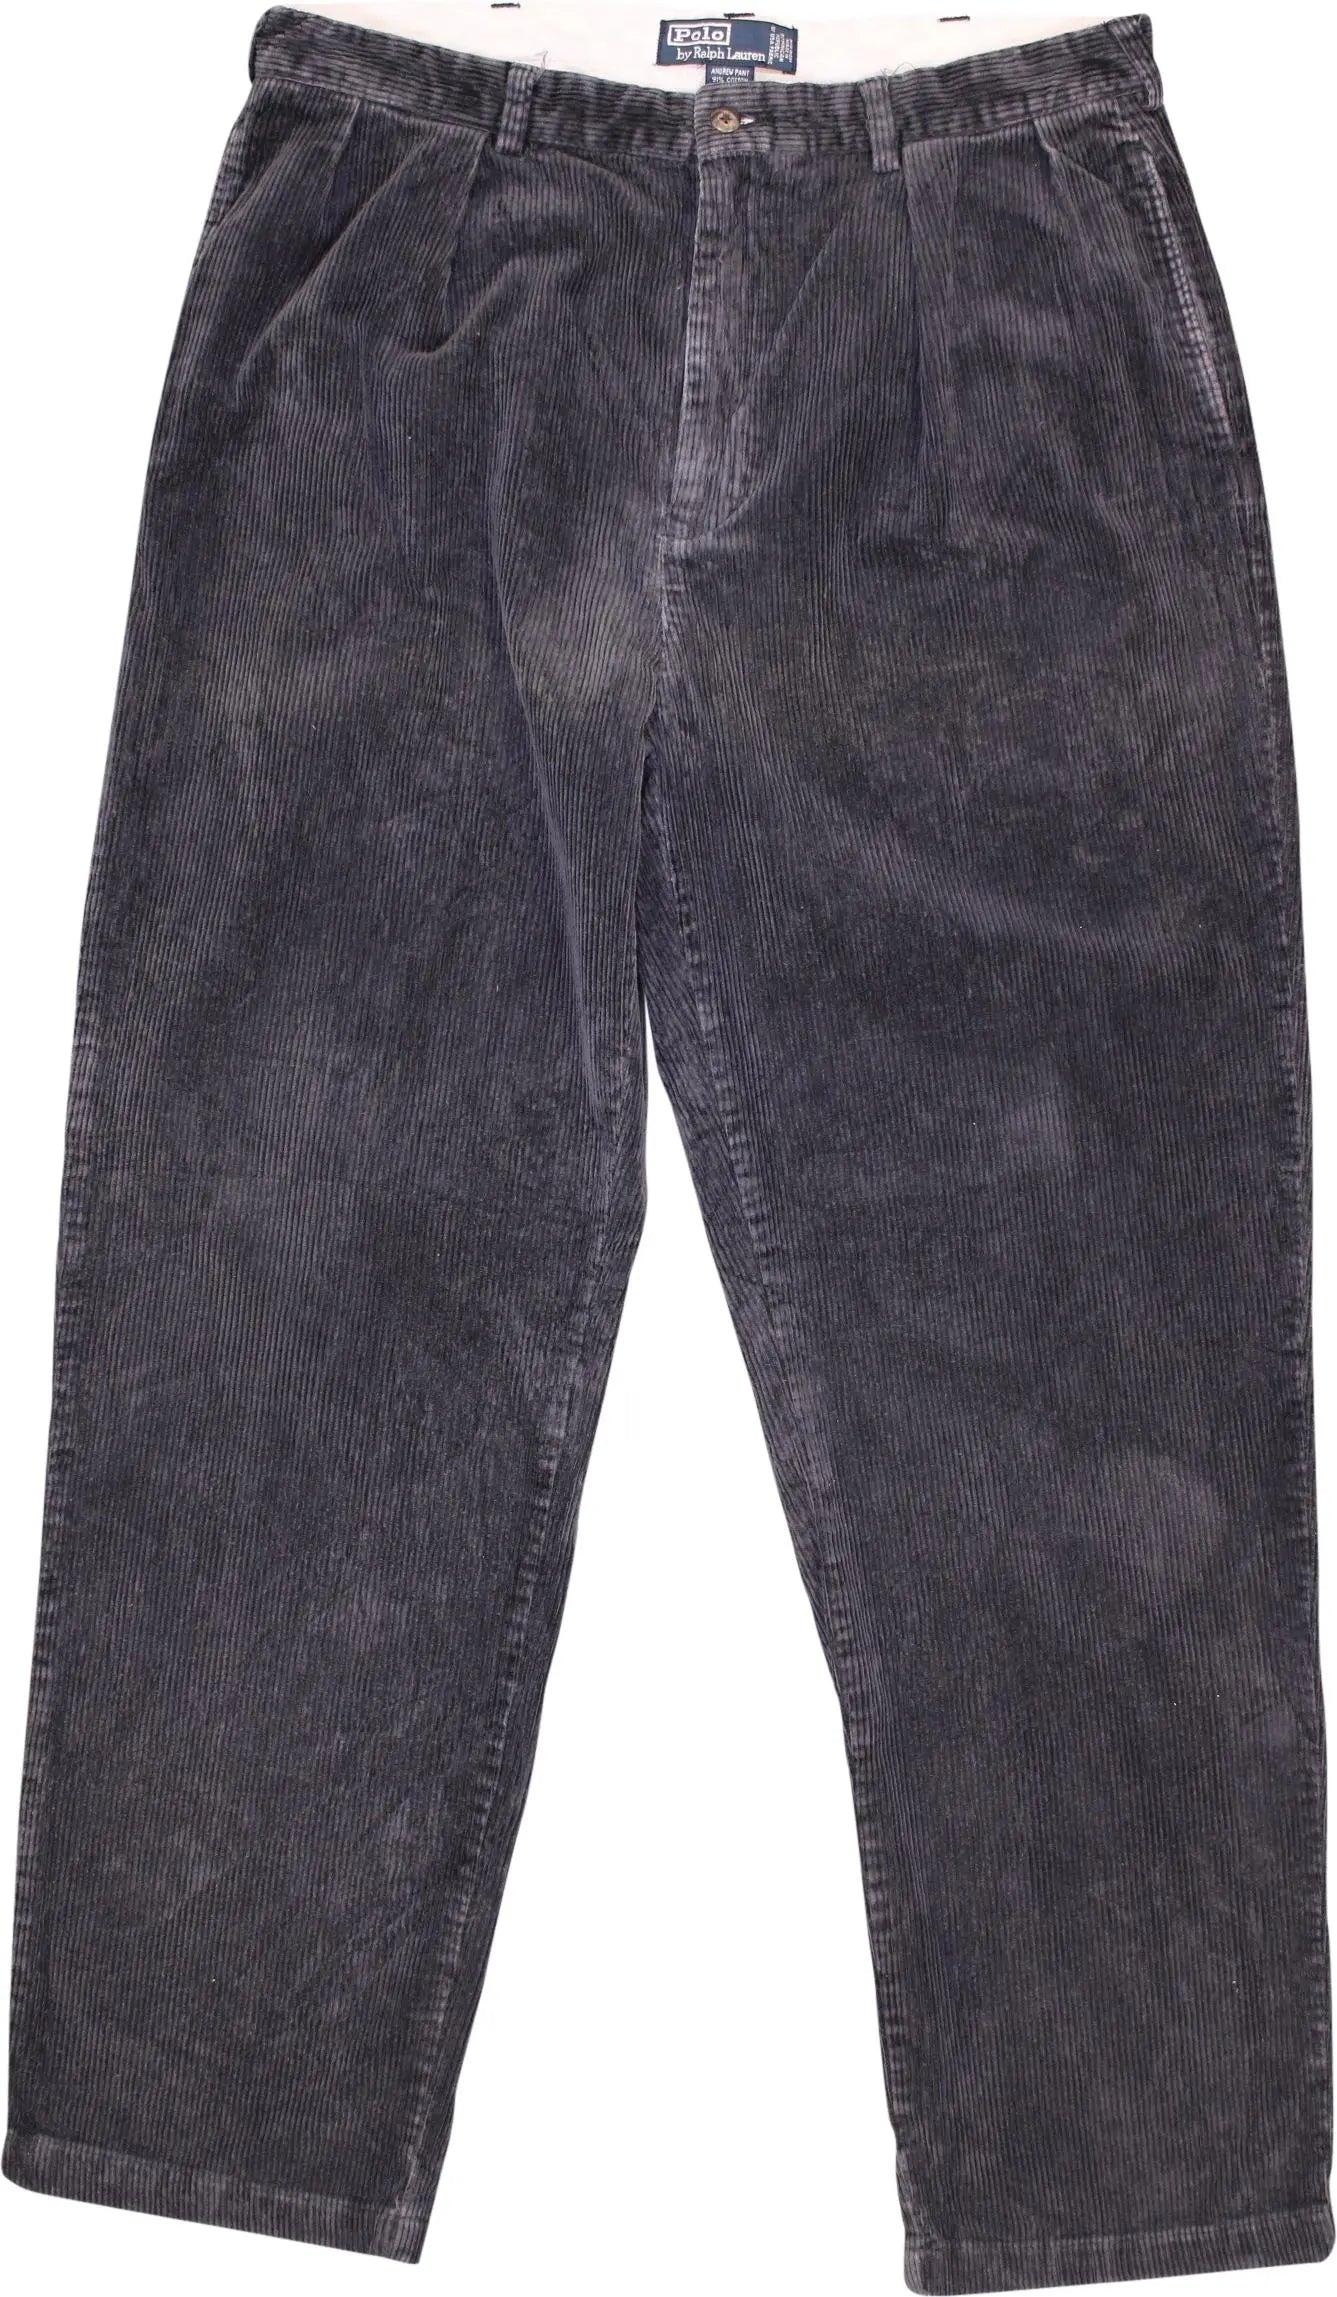 Ralph Lauren - BLUE4873- ThriftTale.com - Vintage and second handclothing